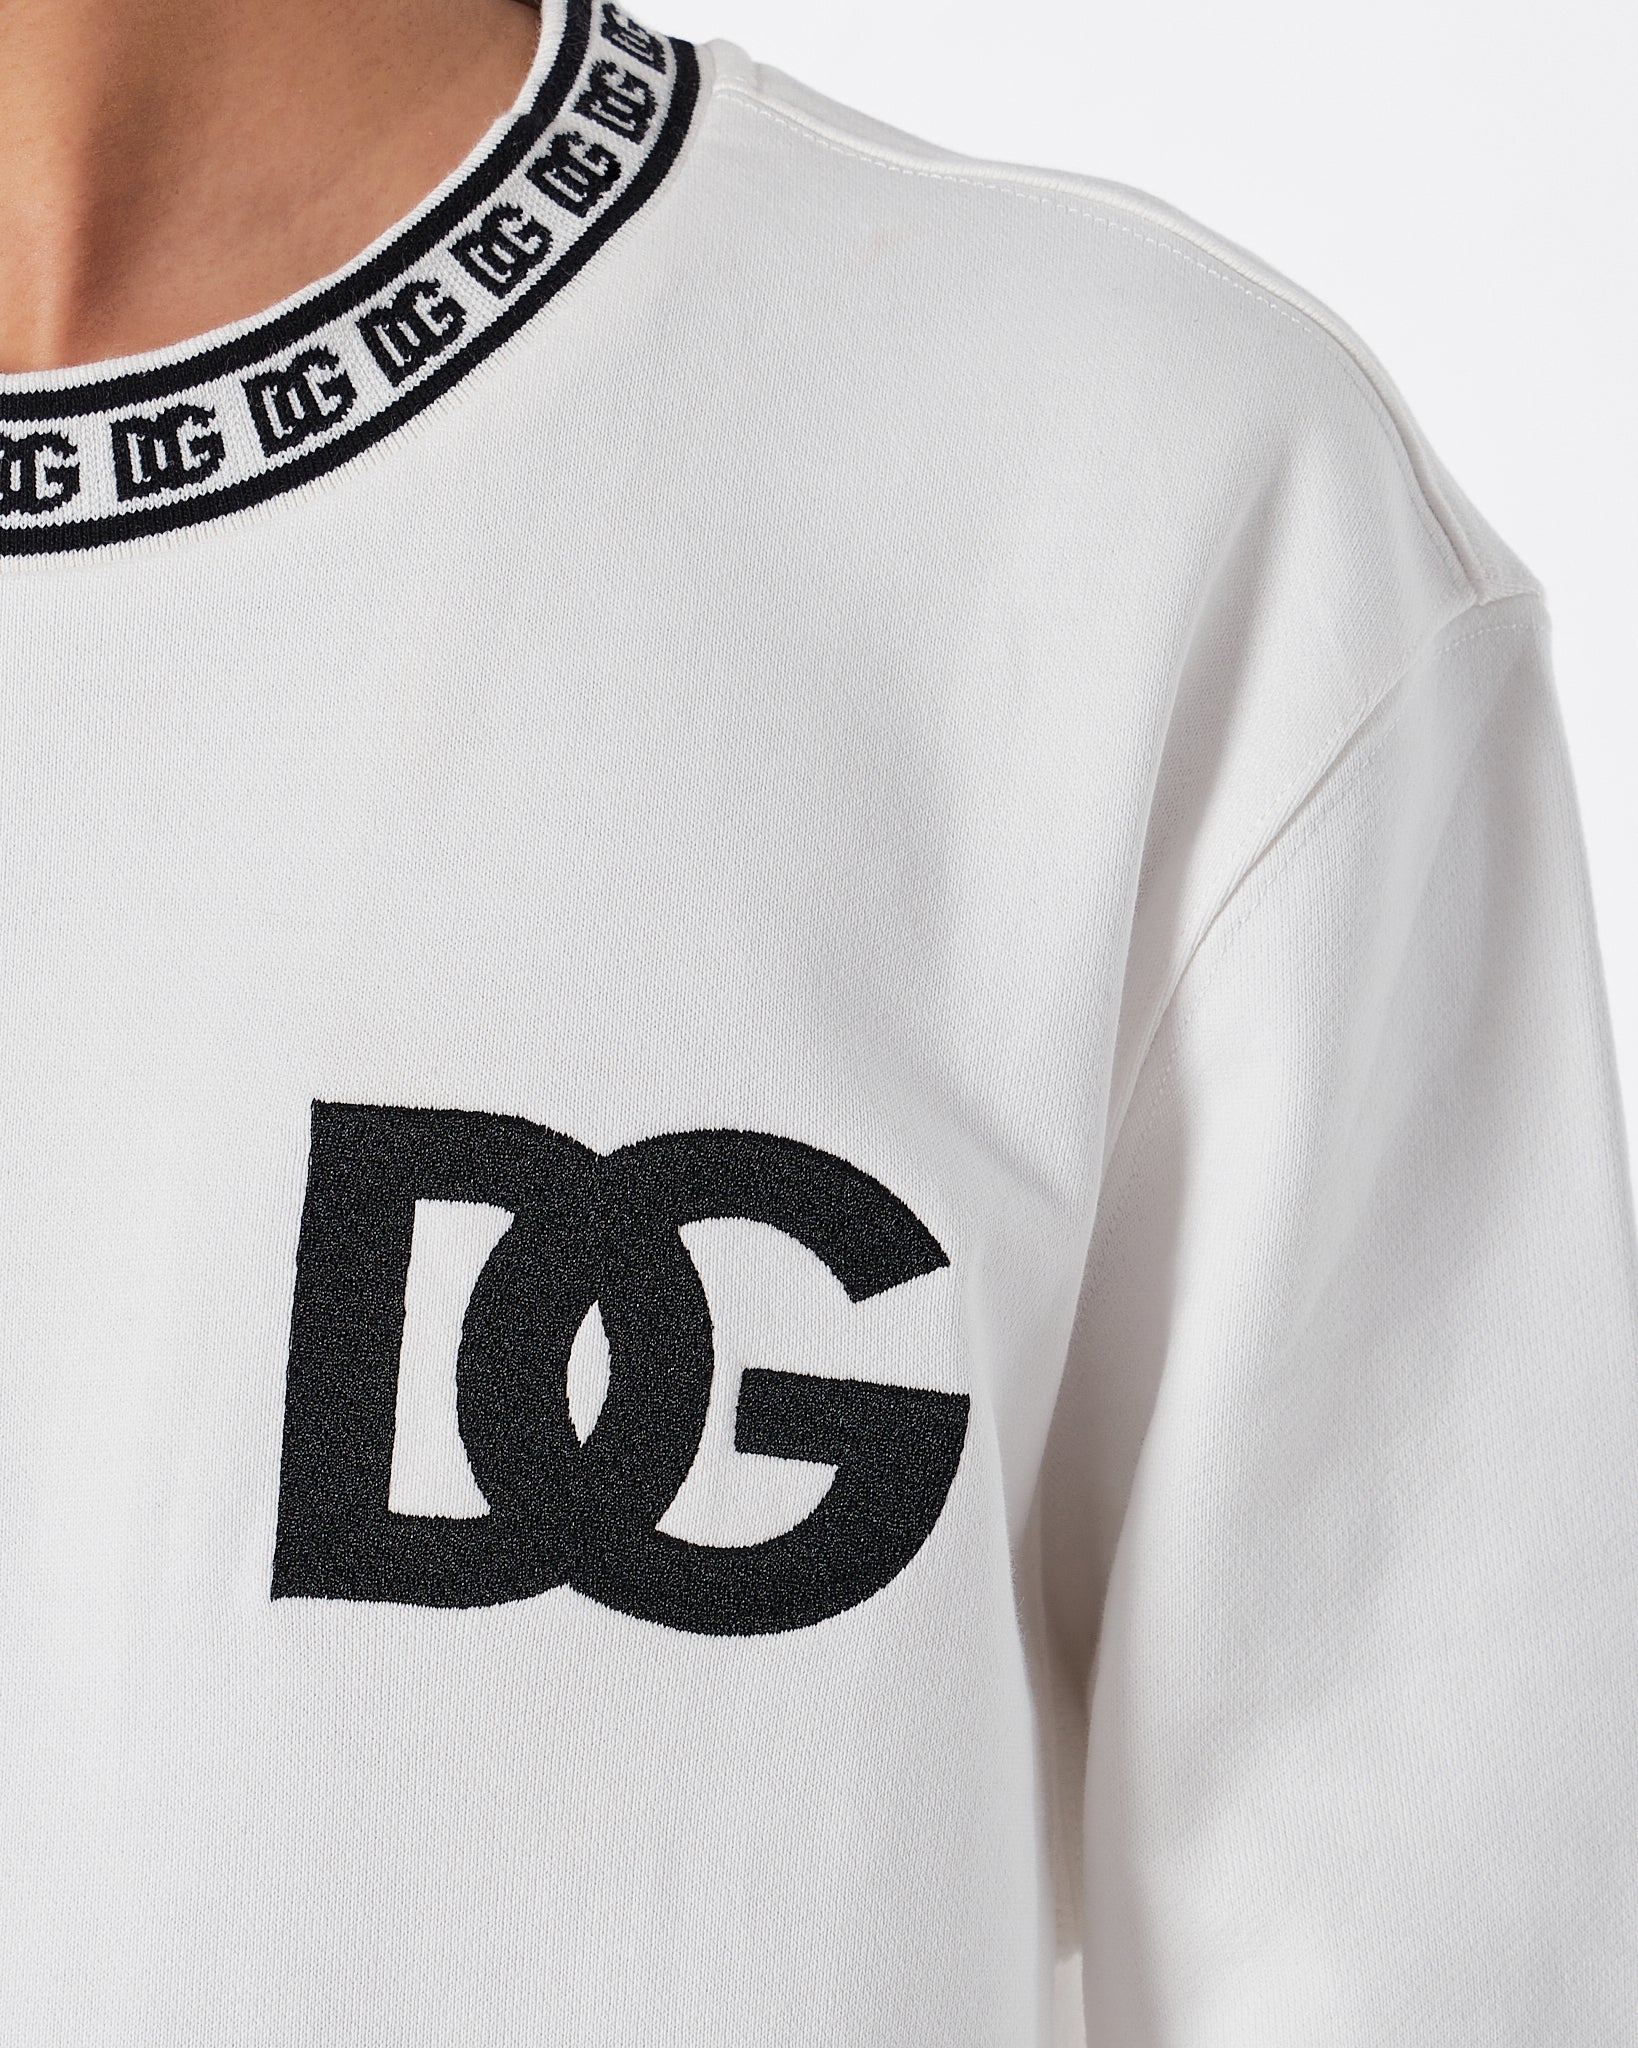 DG Logo Embroidered Men White Sweater 84.90